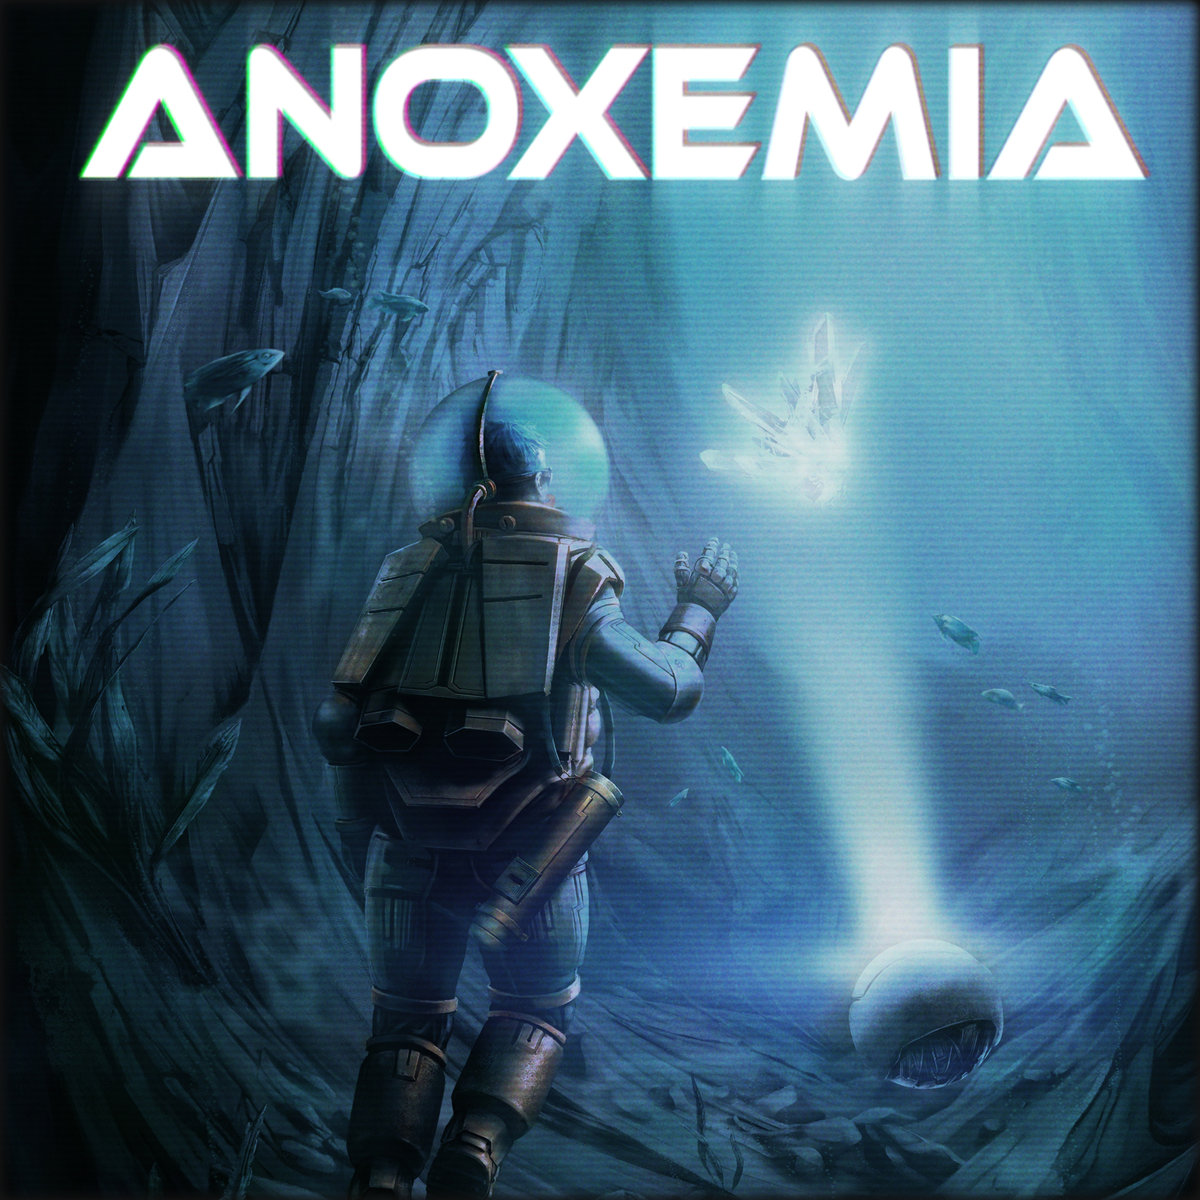 Anoxemia digitaal verkrijgbaar vanaf nu!